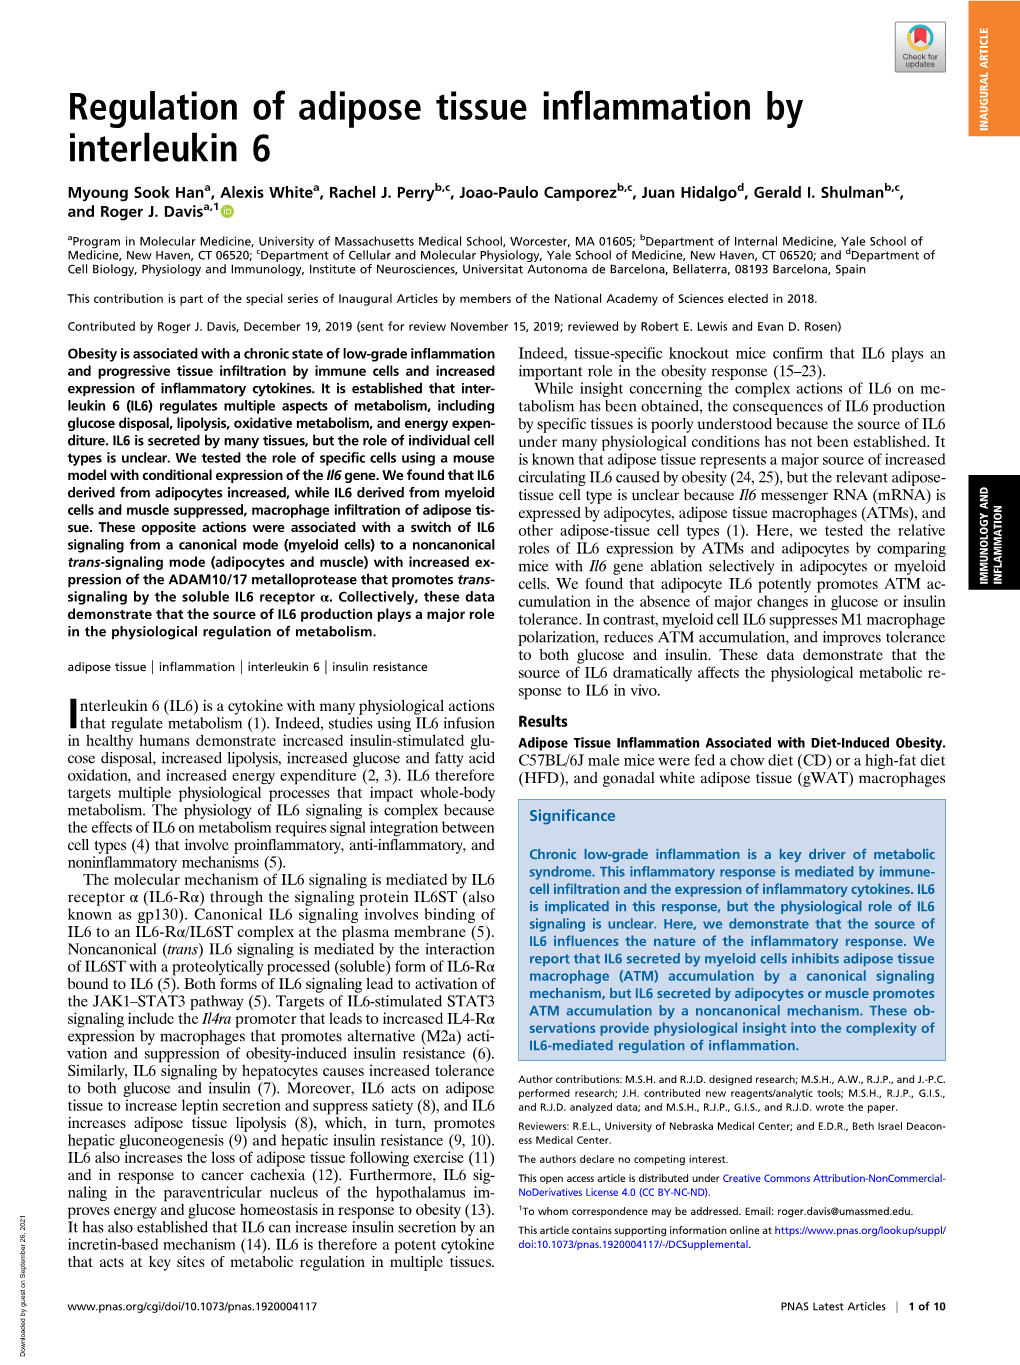 Regulation of Adipose Tissue Inflammation by Interleukin 6